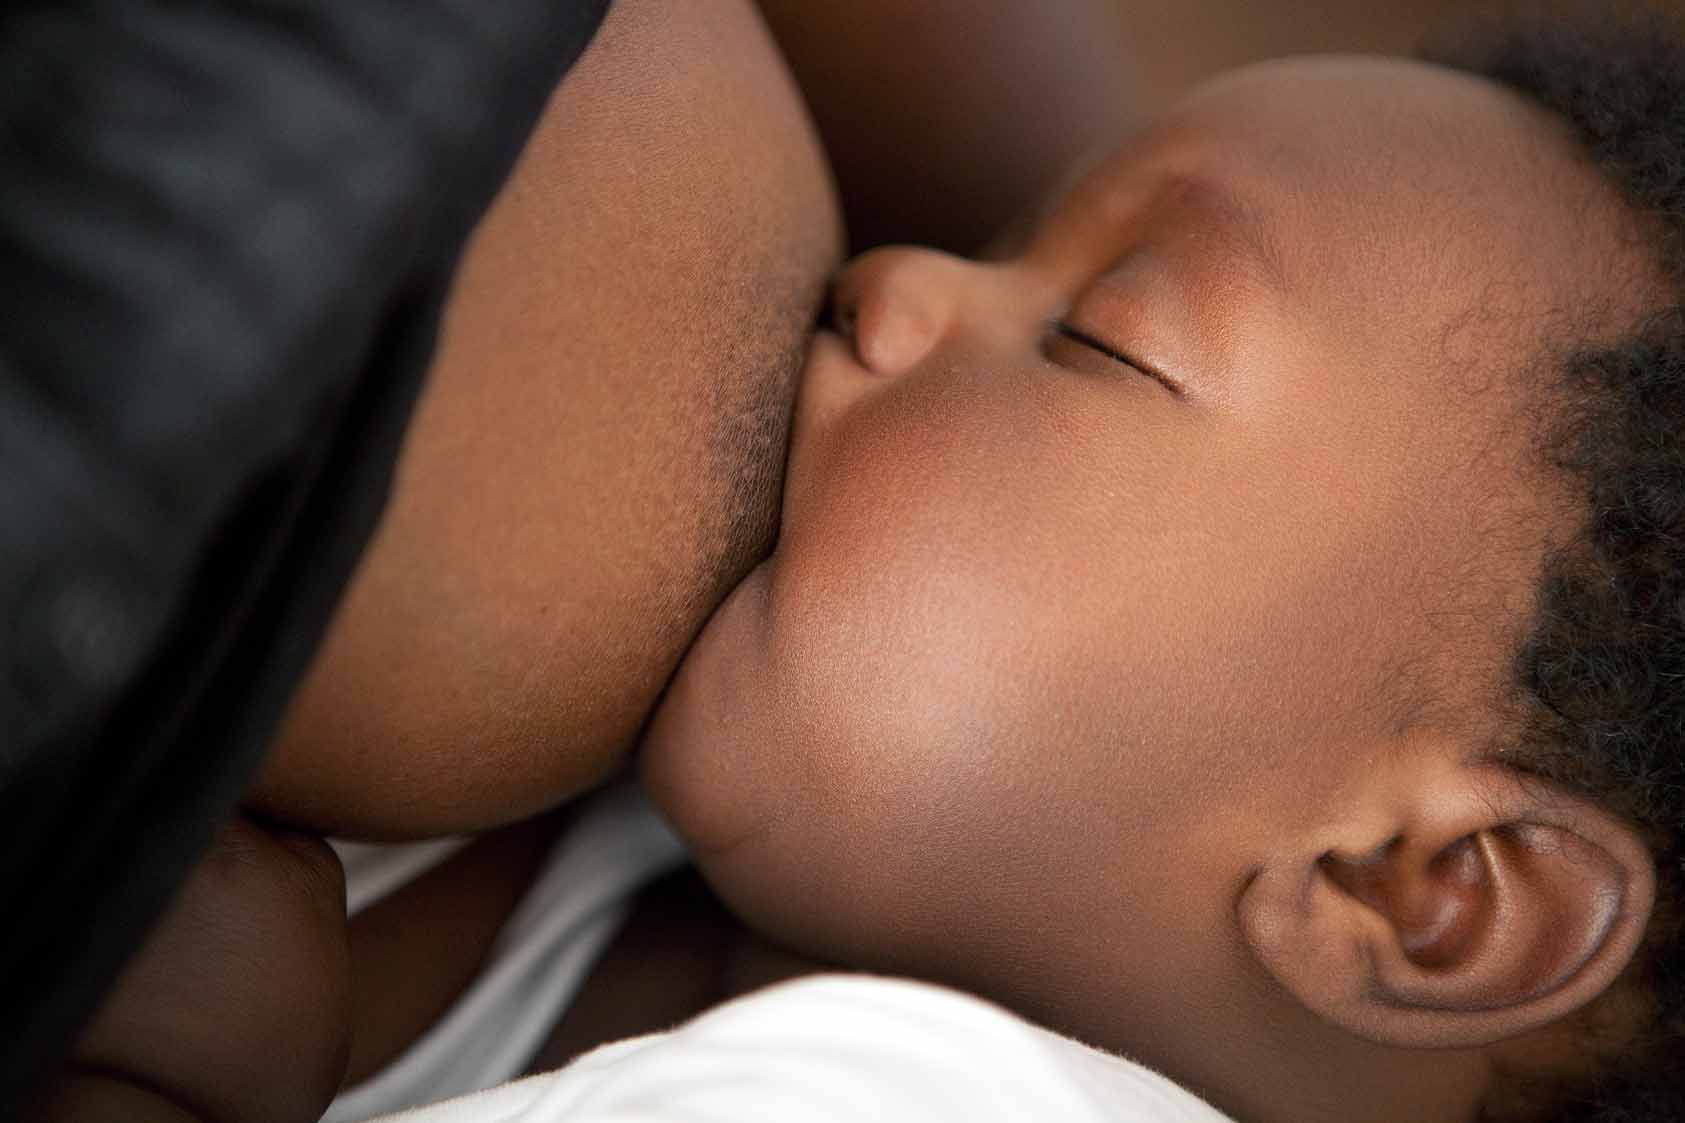 breastfeeding attachment6